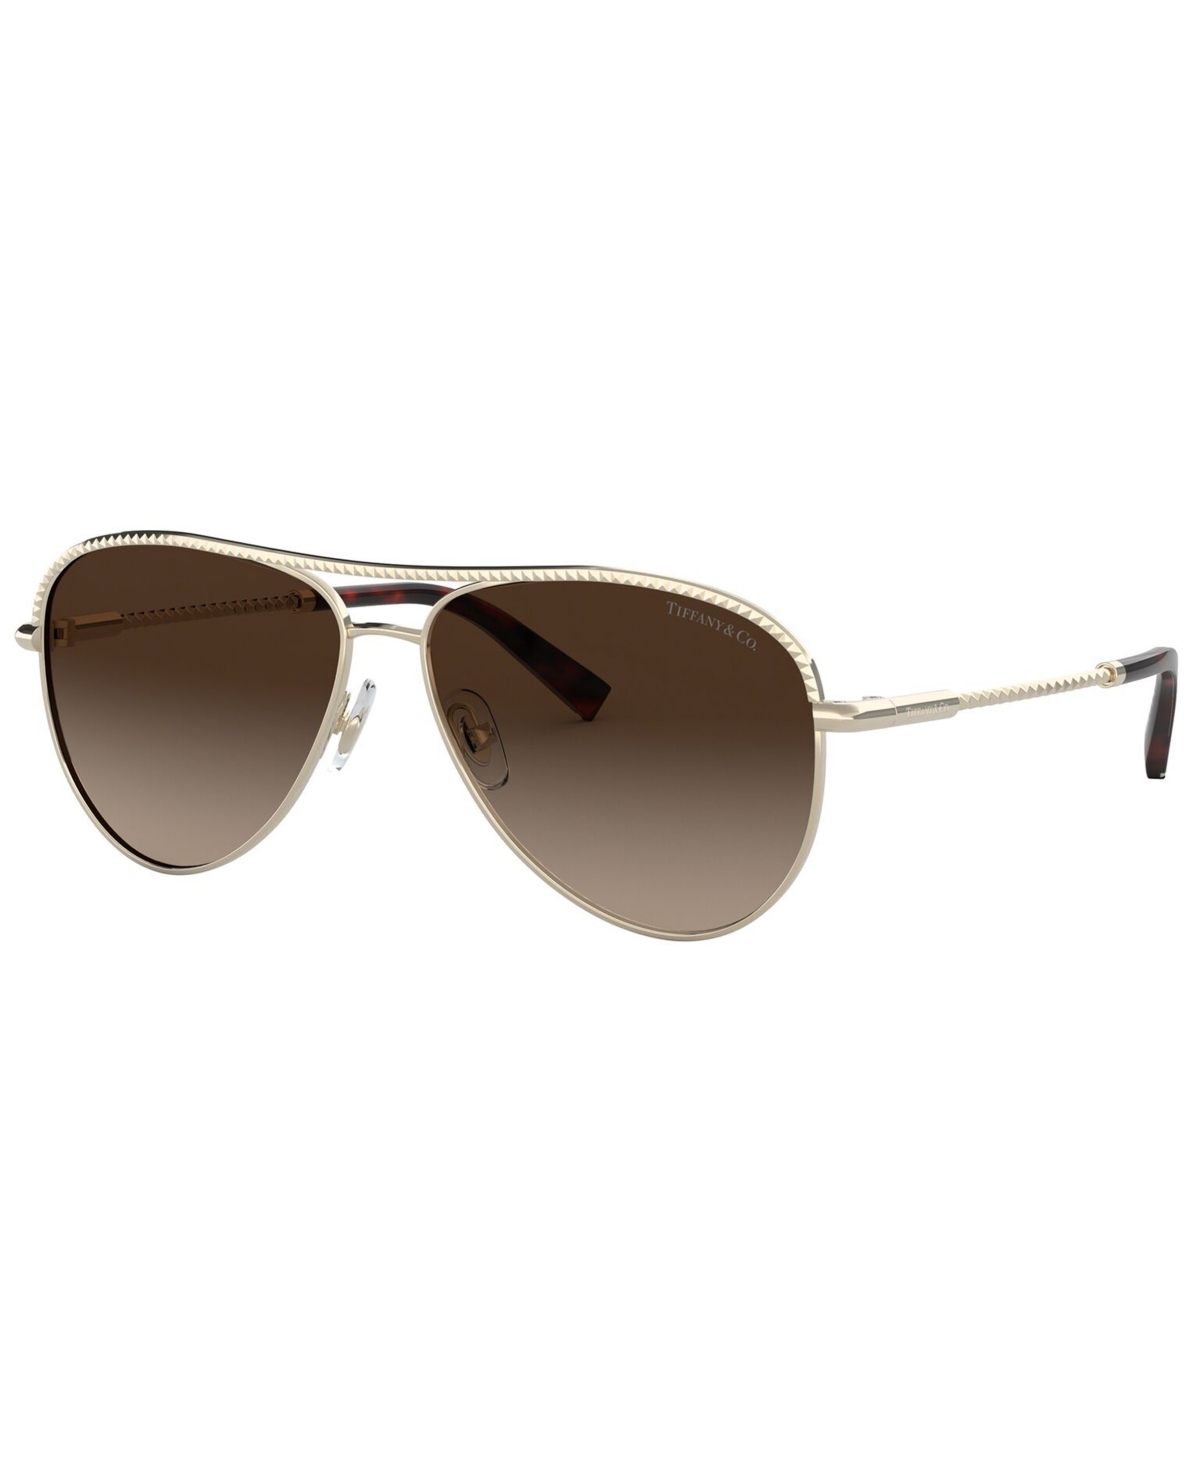 Tiffany & Co. Sunglasses, Small Pilot TF3062 57 PALE GOLD/BROWN GRADIENT $193 FS